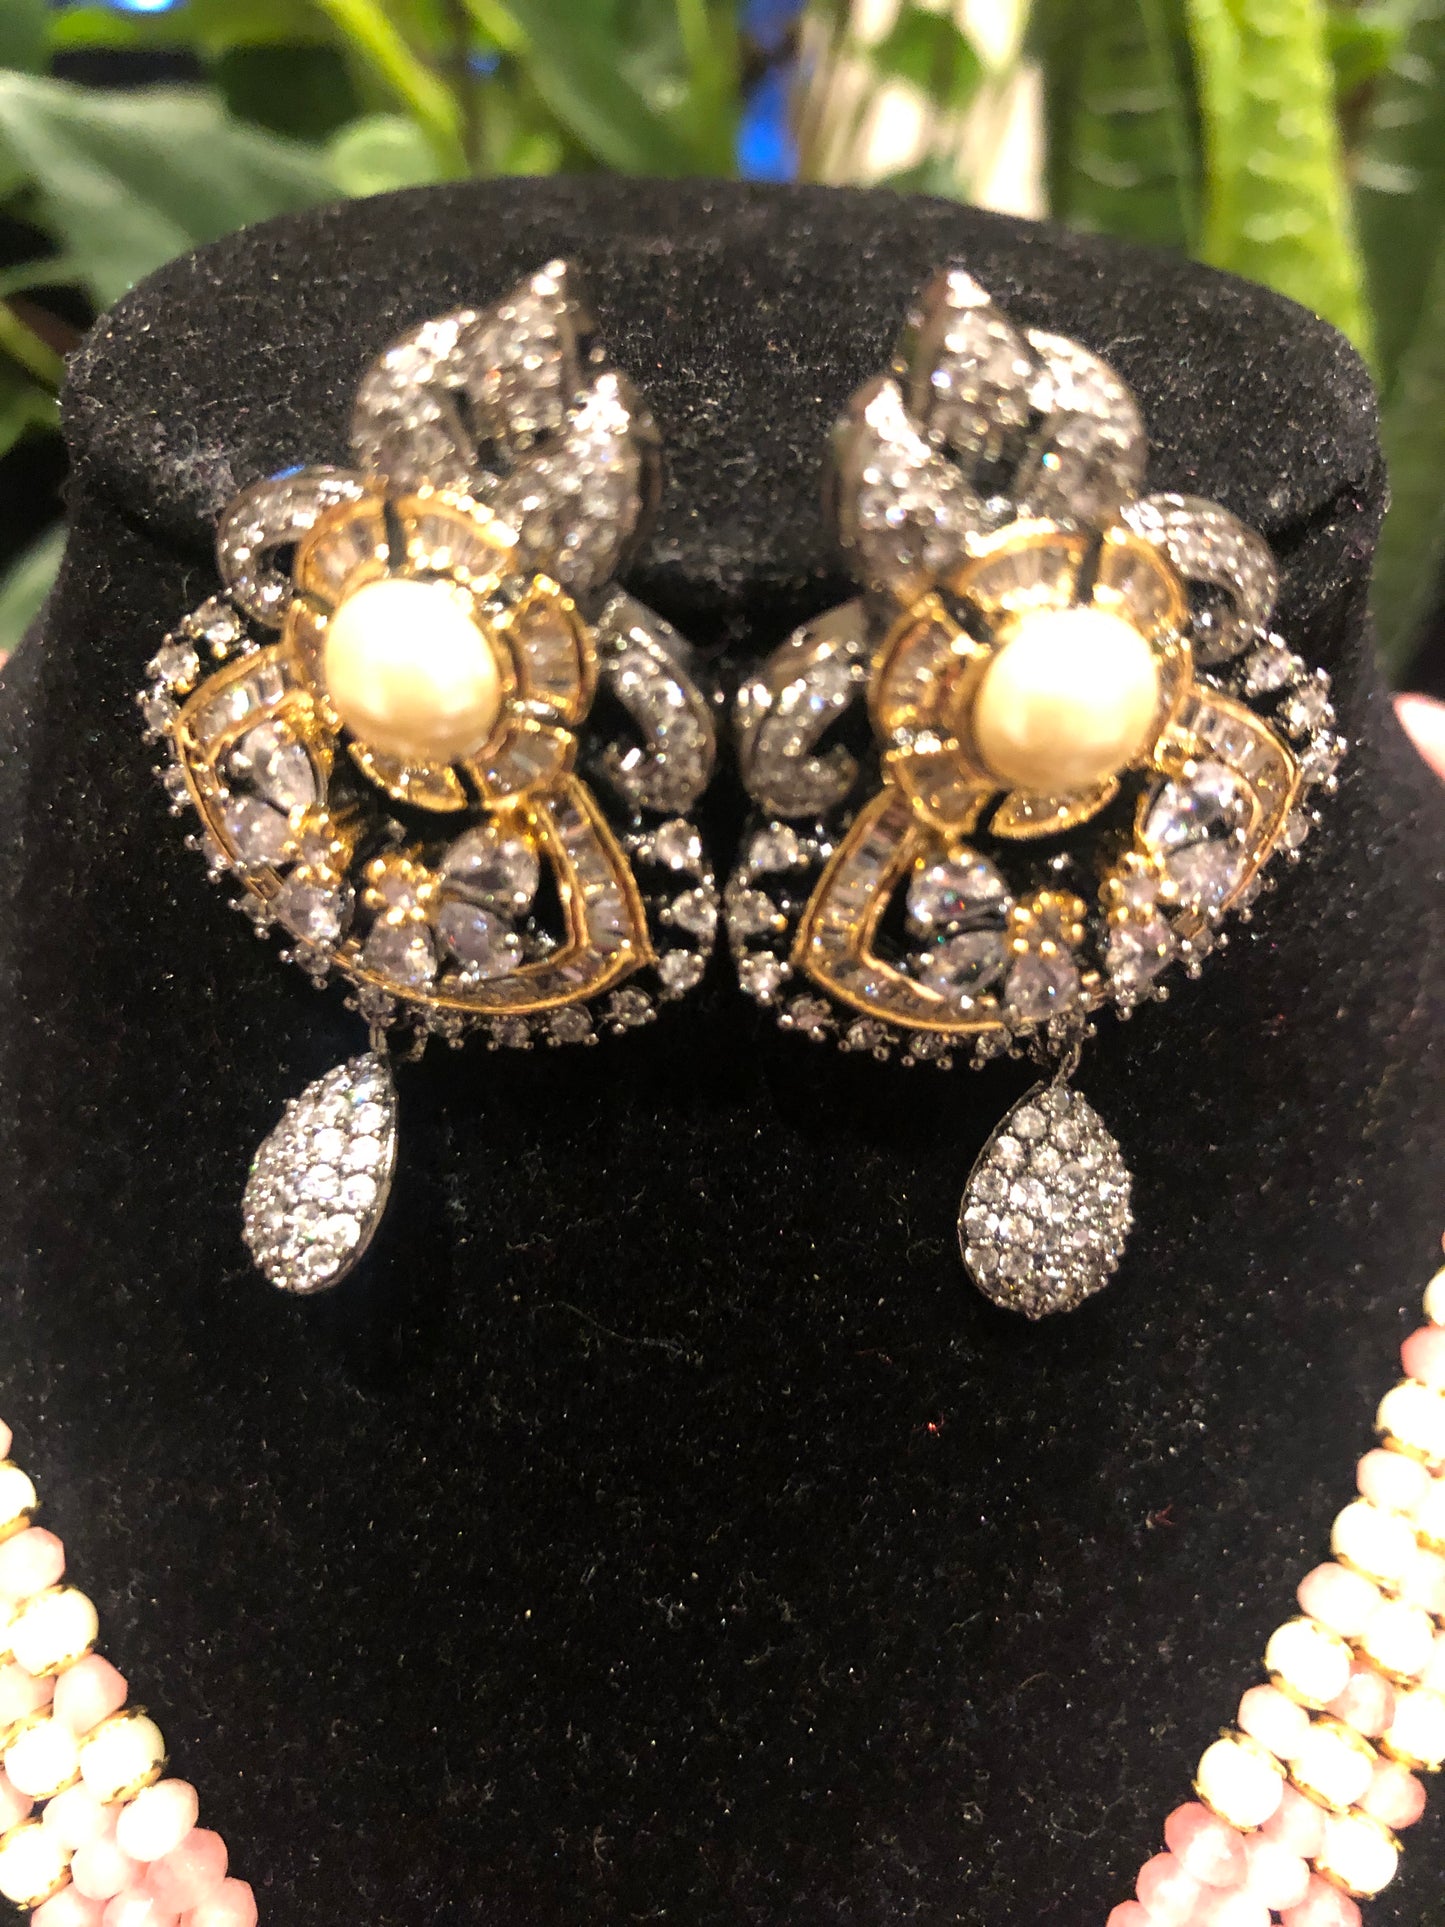 Beads neckpiece with earring